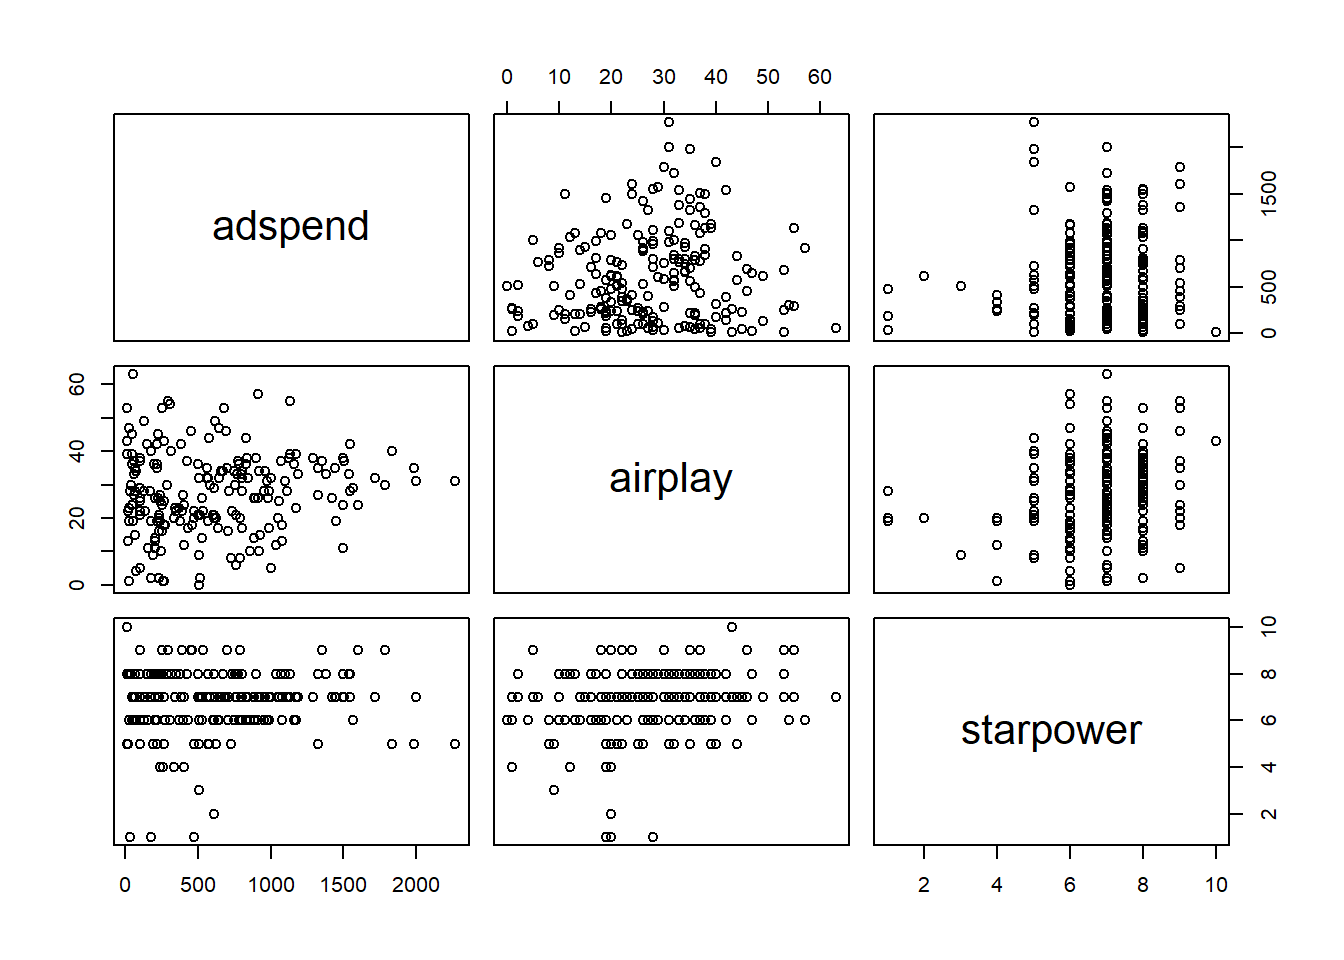 Bivariate correlation plots